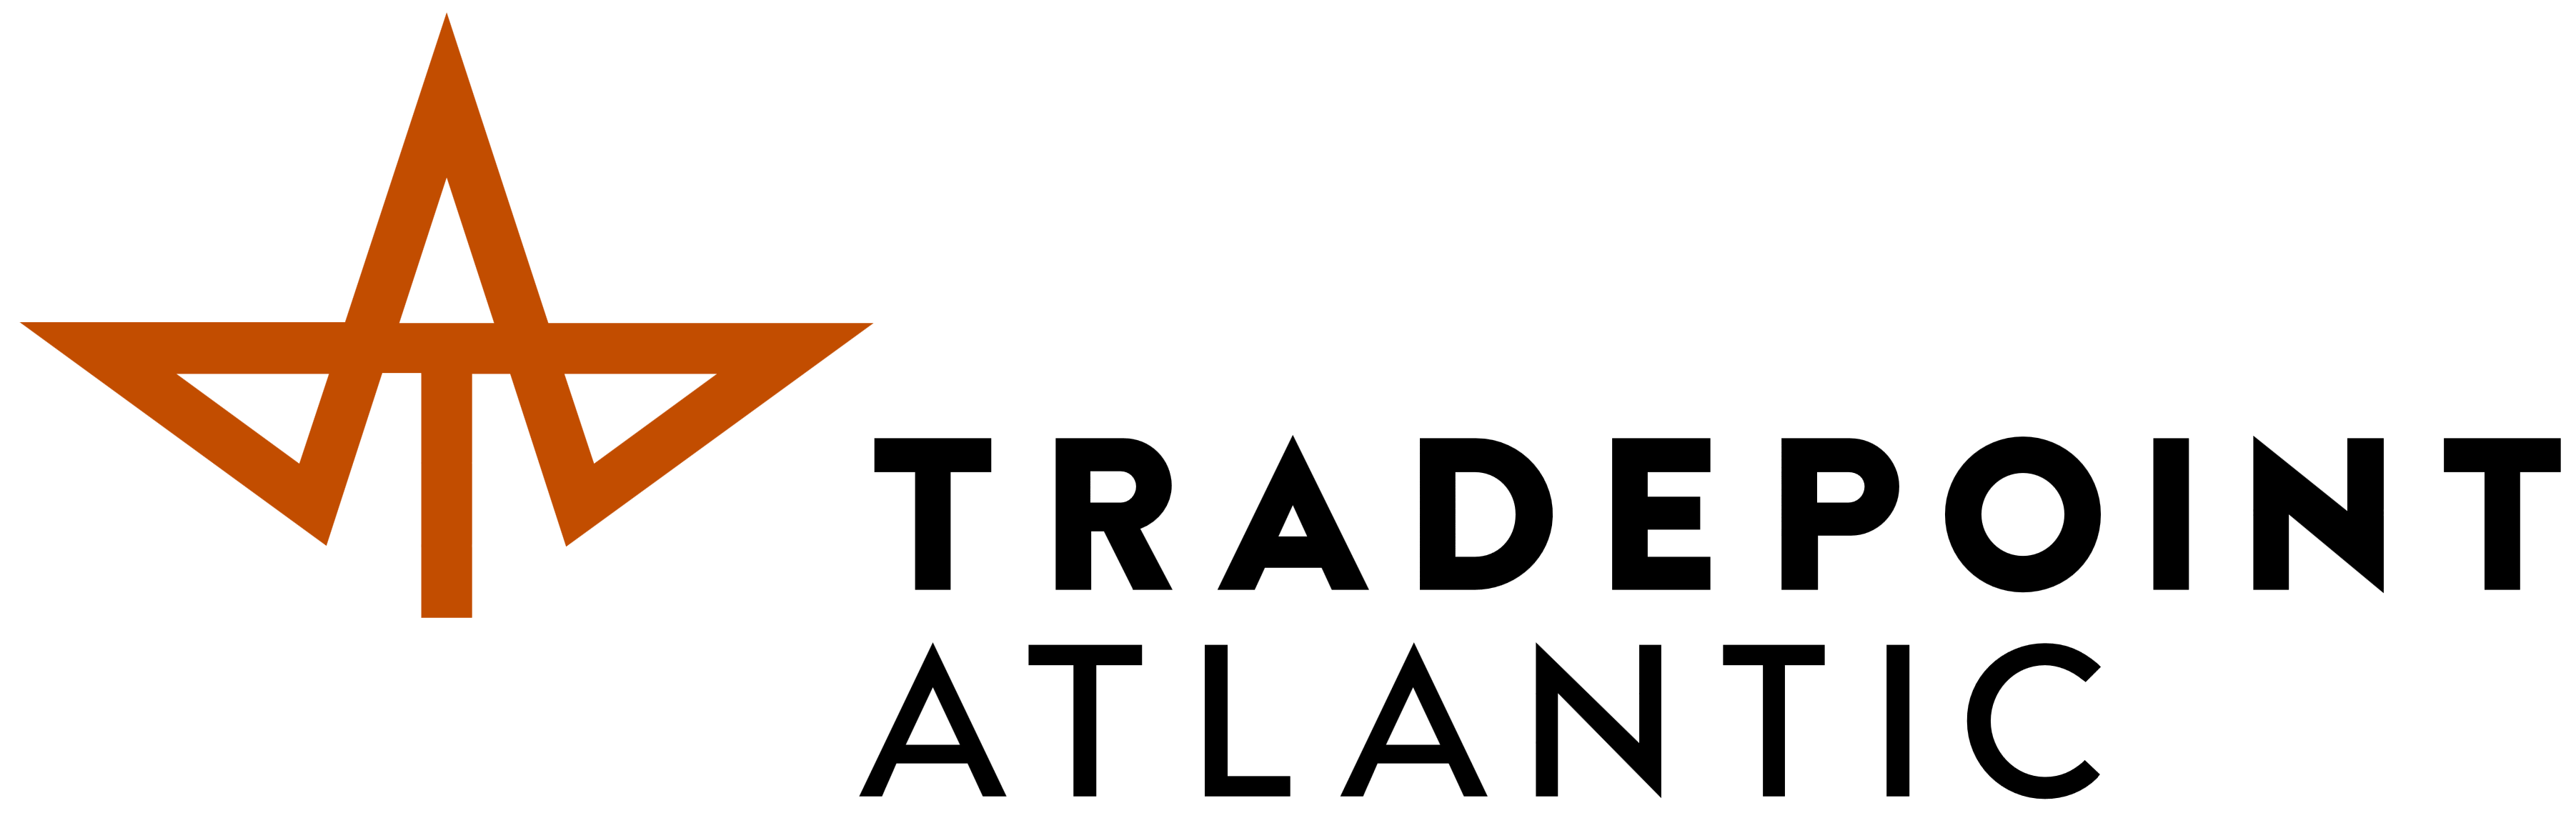 Tradepoint Atlantic logo, logotype